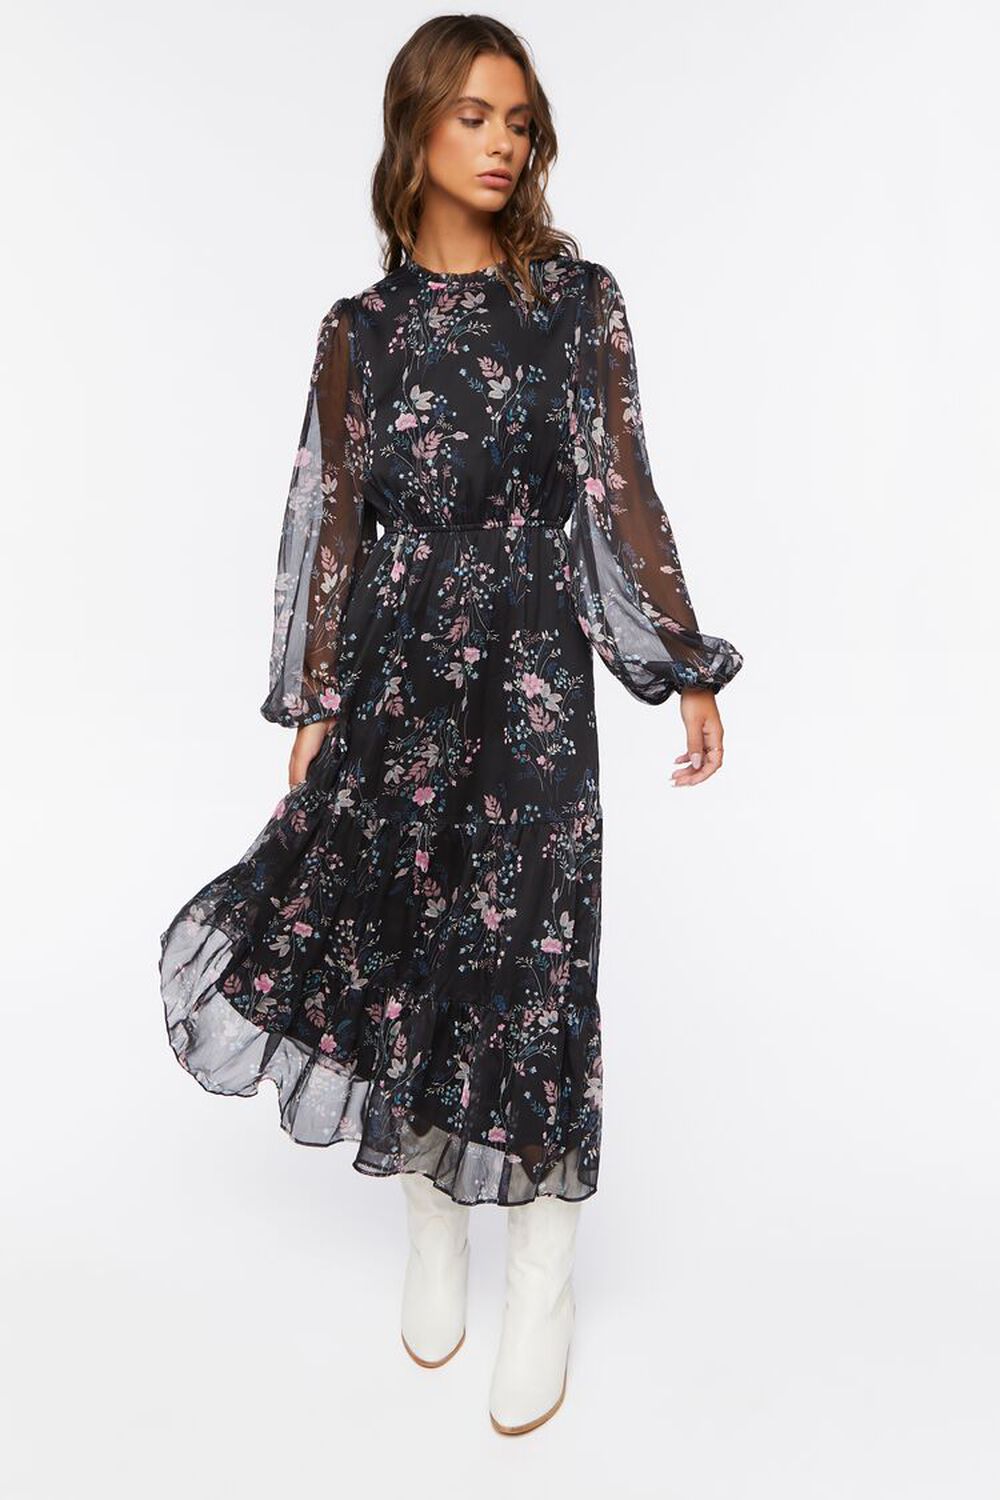 BLACK/MULTI Chiffon Floral Print Midi Dress, image 1